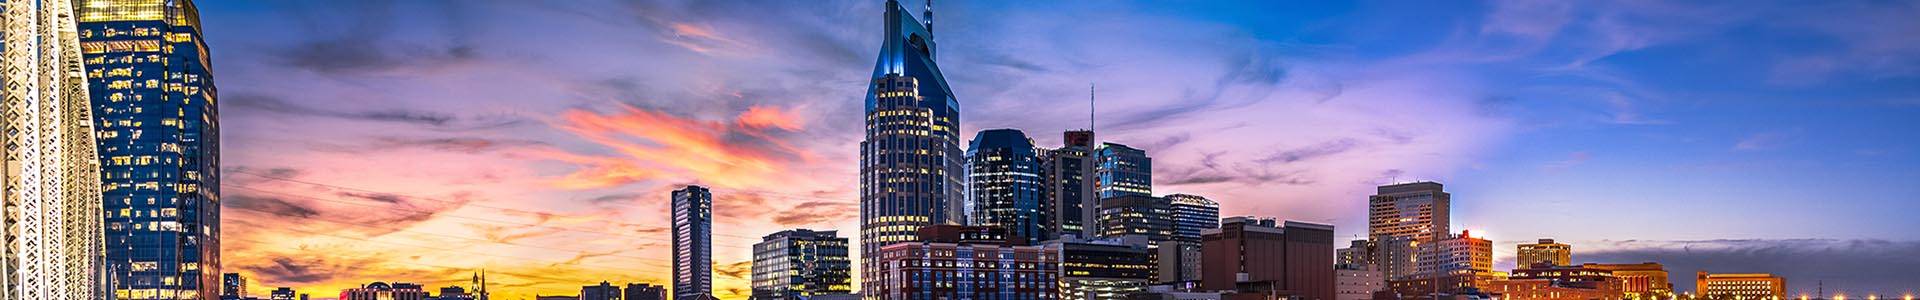 IRR-Nashville: Insights into the Local Market